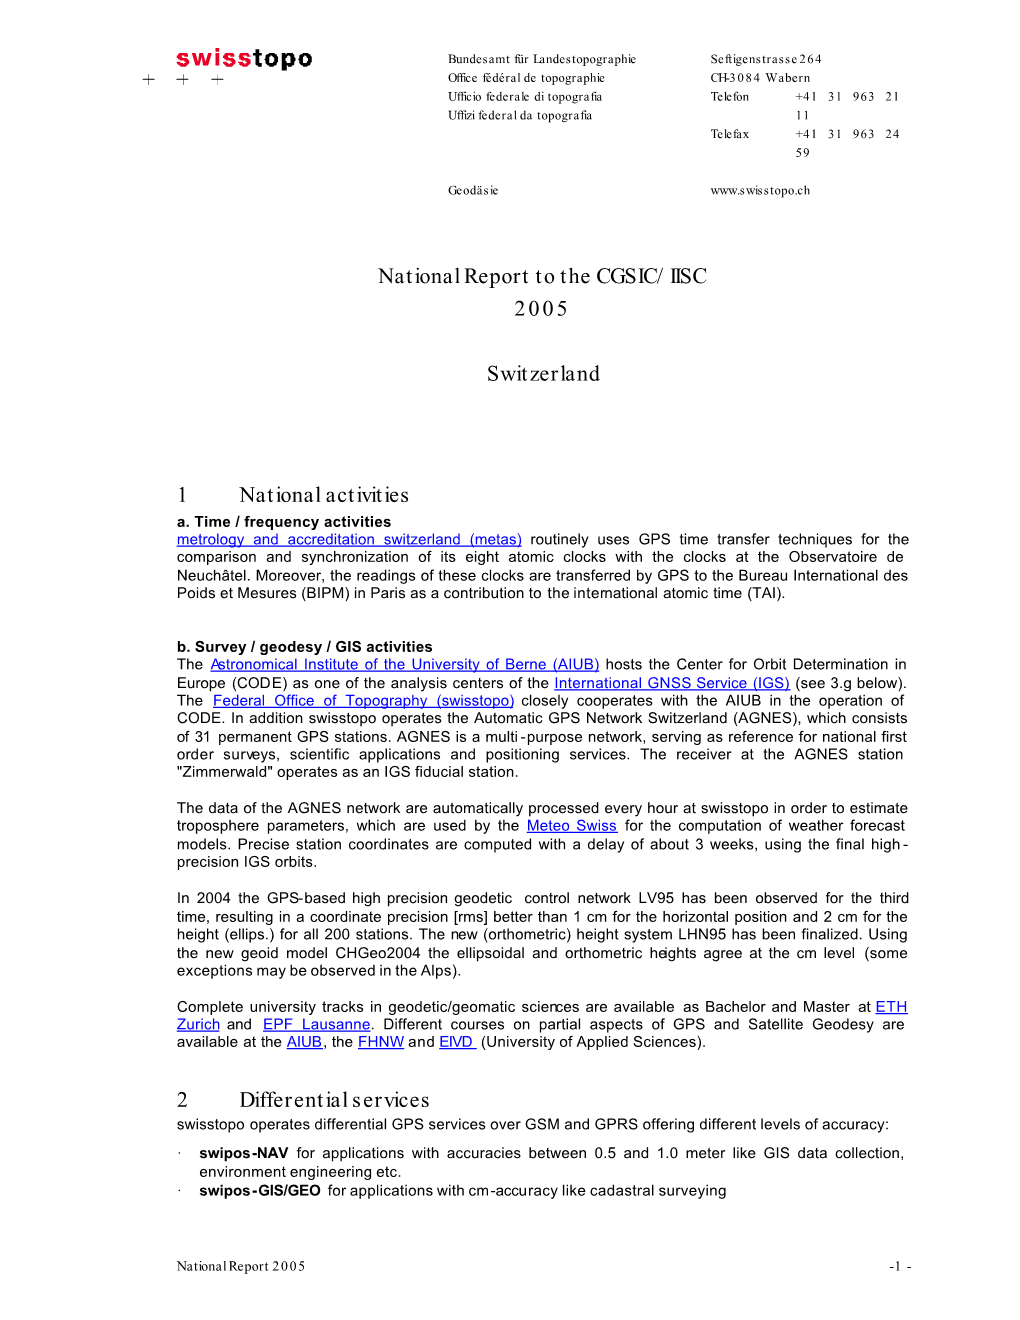 National Report to the CGSIC/IISC 2005